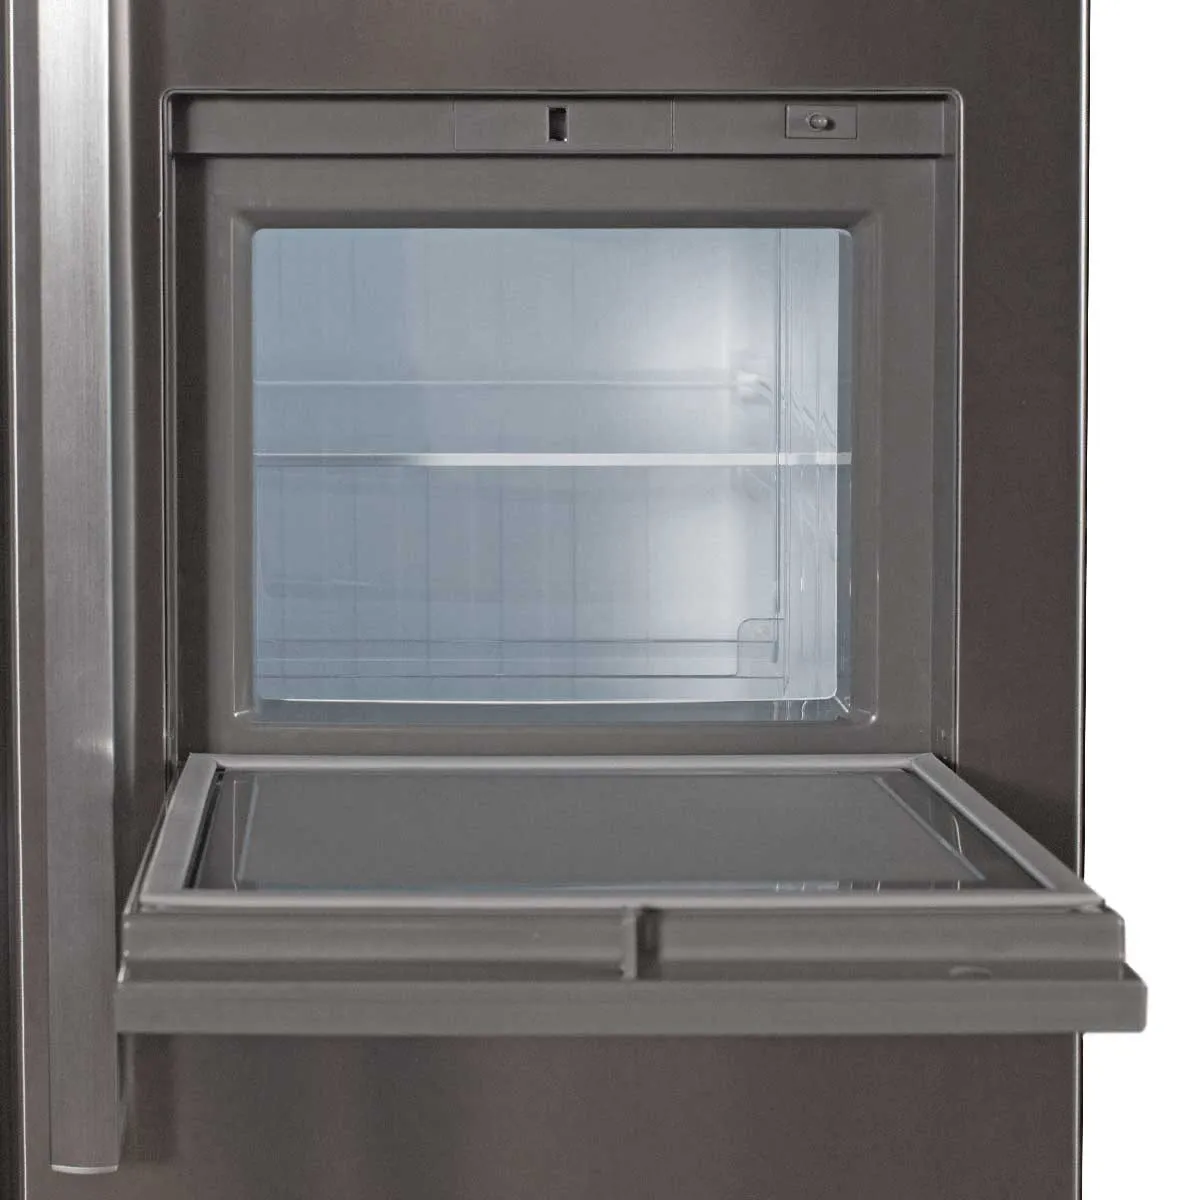 Refrigerator SBS 657 IXF 